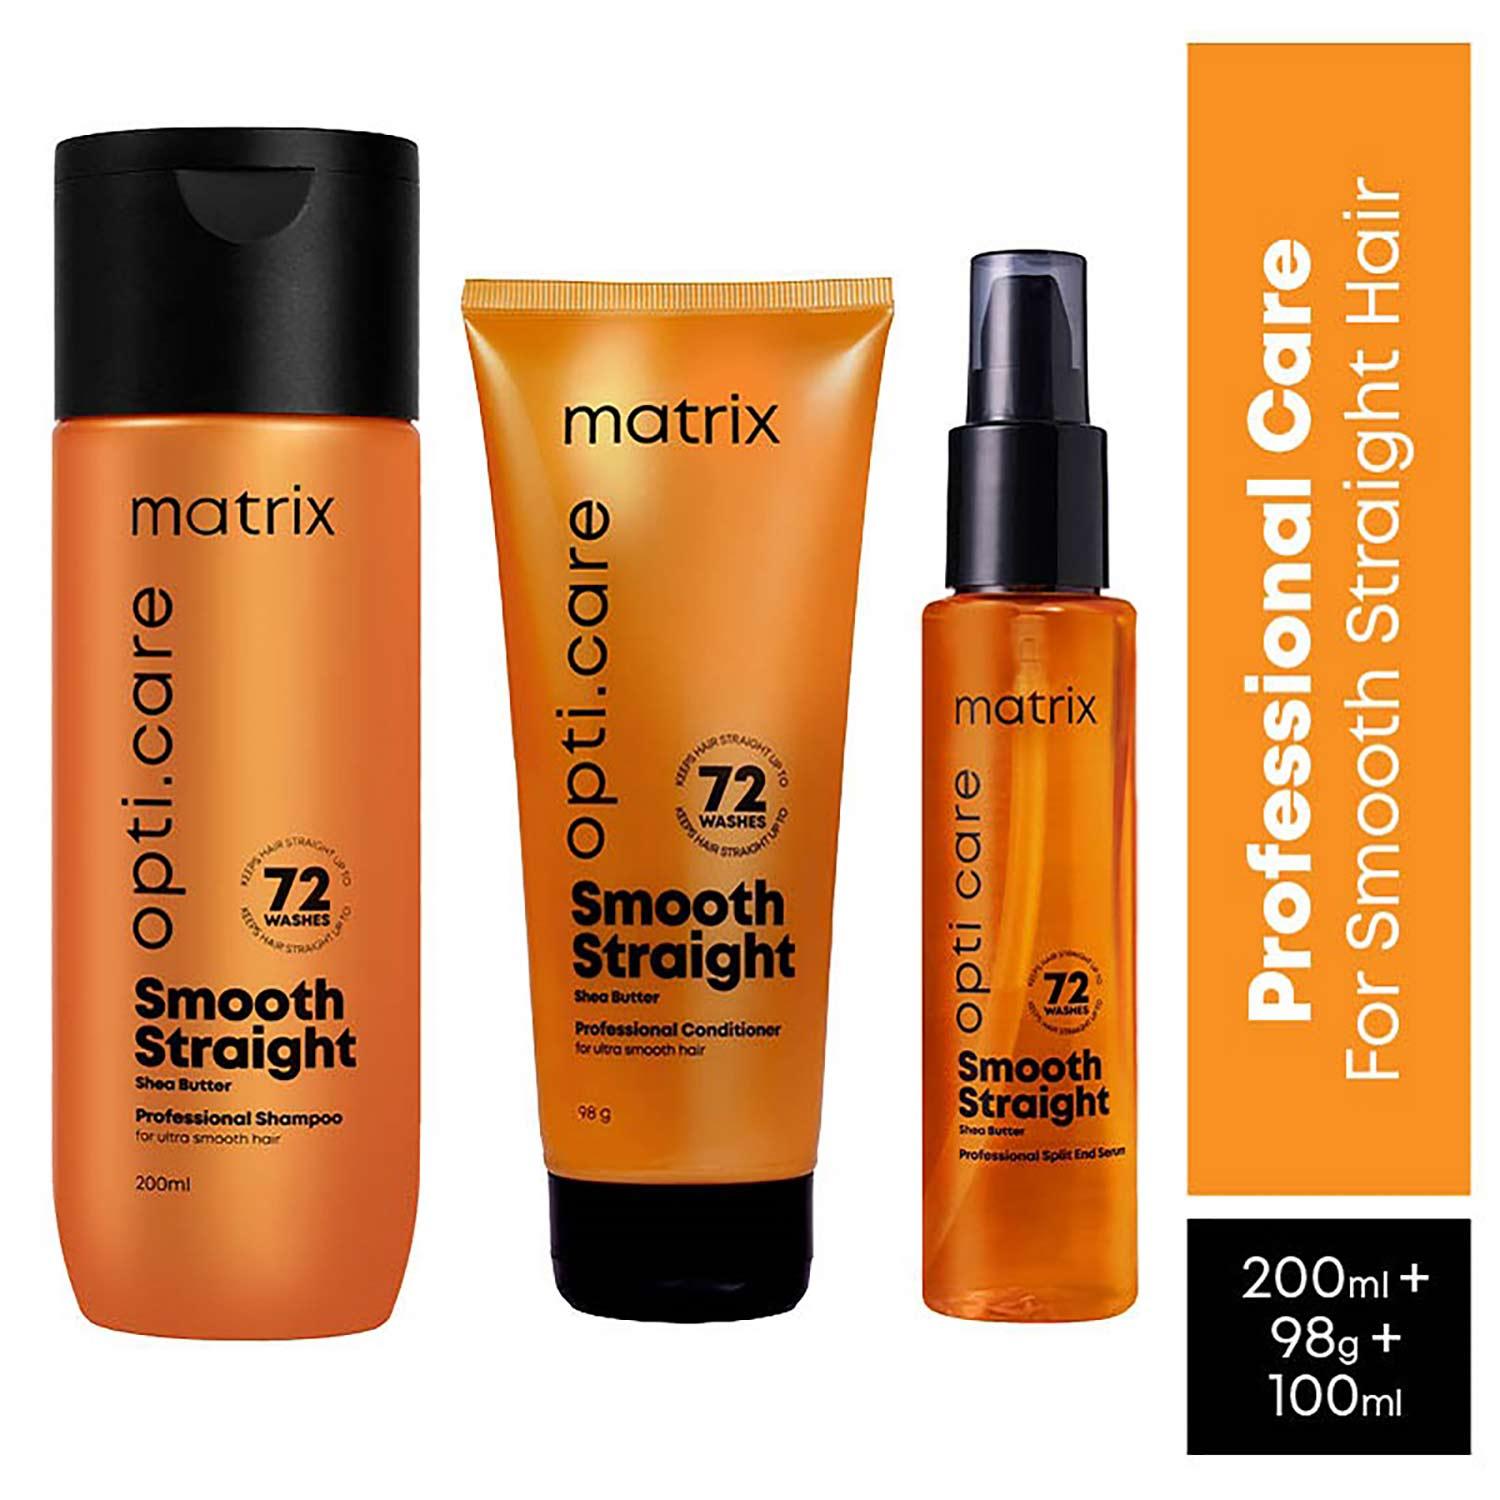 Matrix  Tira: Shop Makeup, Skin, Hair & Beauty Products Online